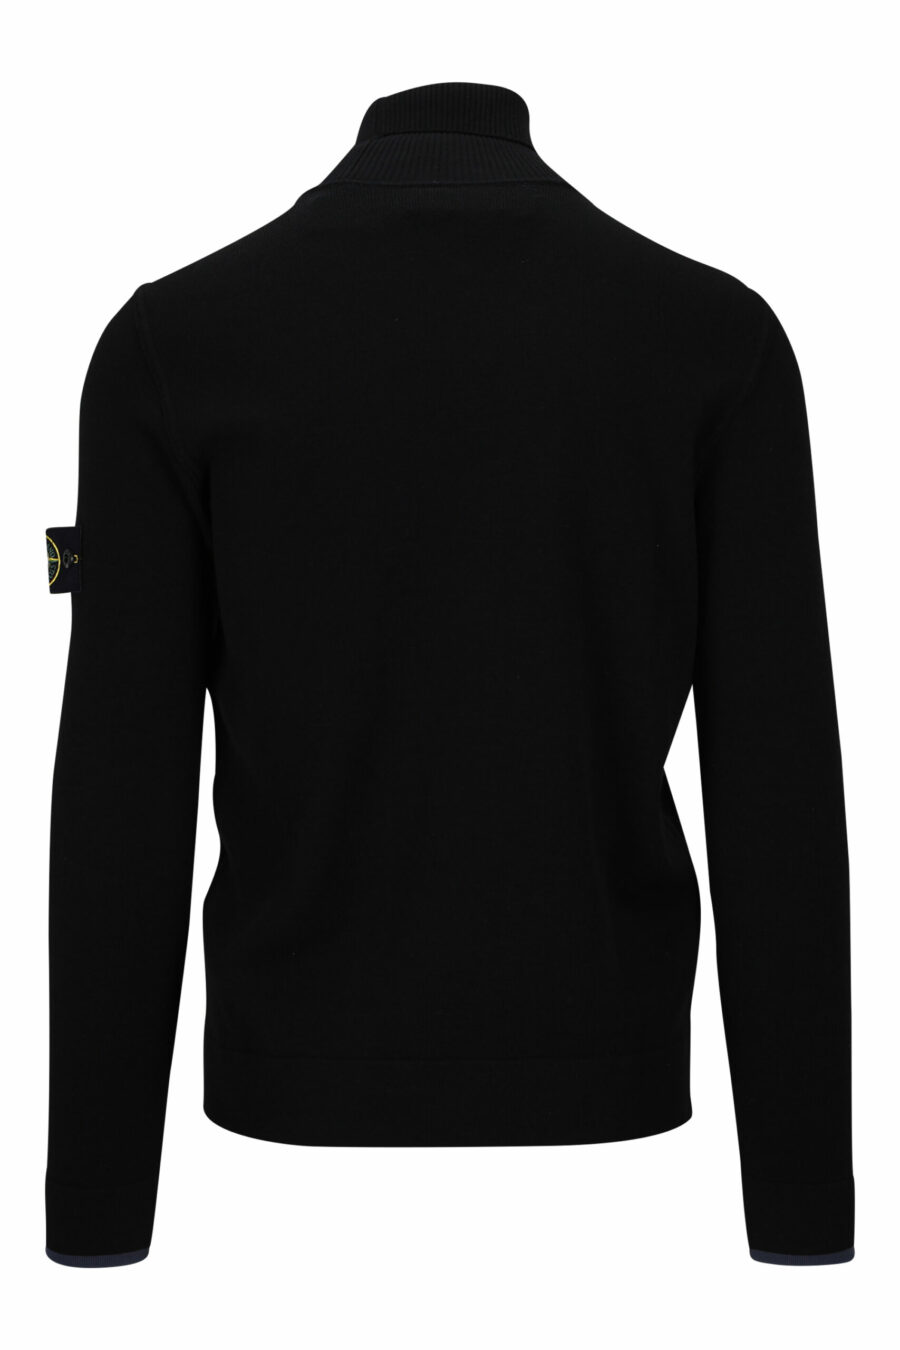 Sweatshirt preta com gola alta e logótipo lateral - 8052572741814 2 scaled